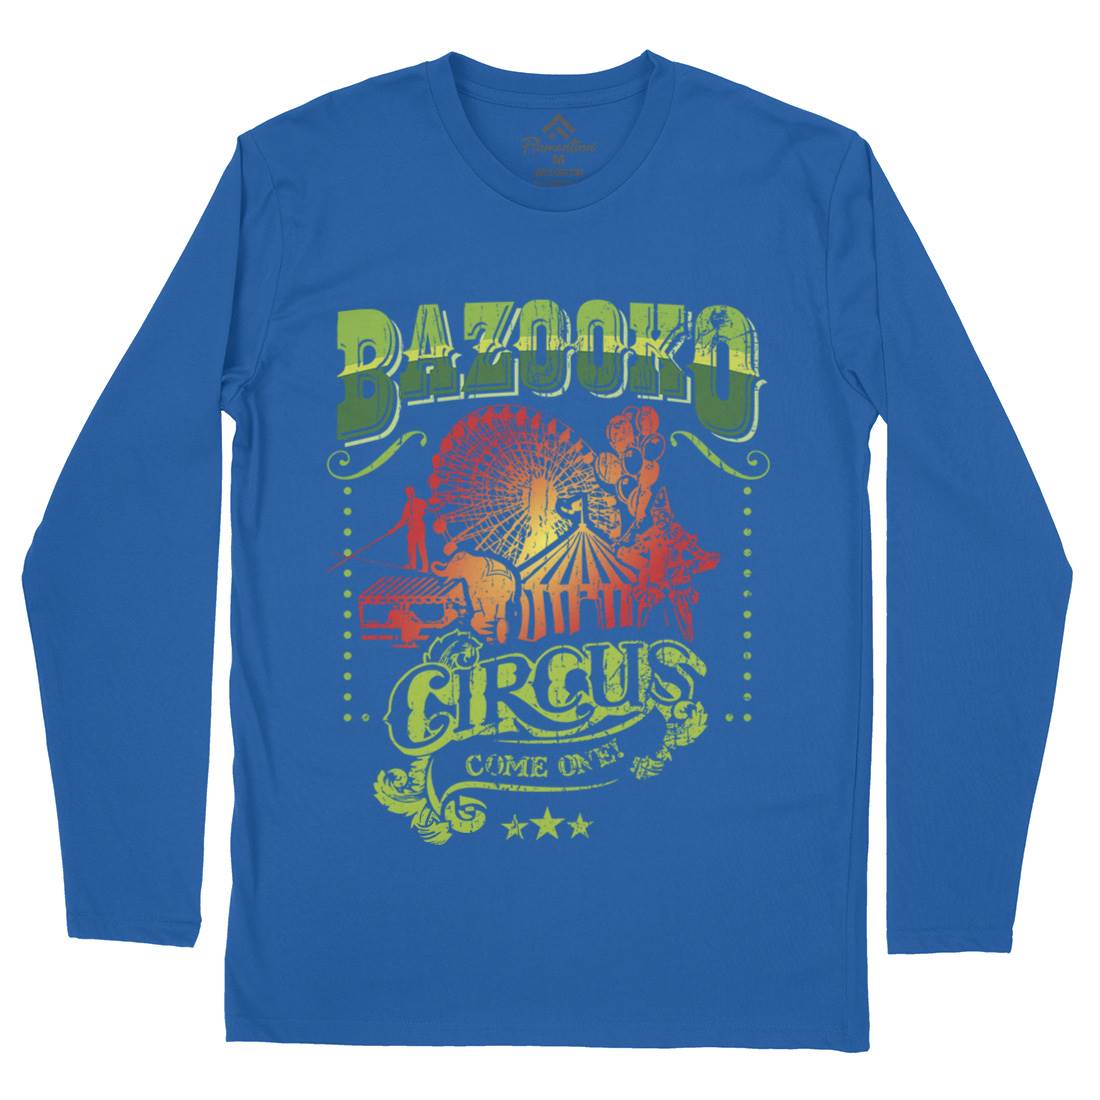 Bazookos Circus Mens Long Sleeve T-Shirt Retro D254